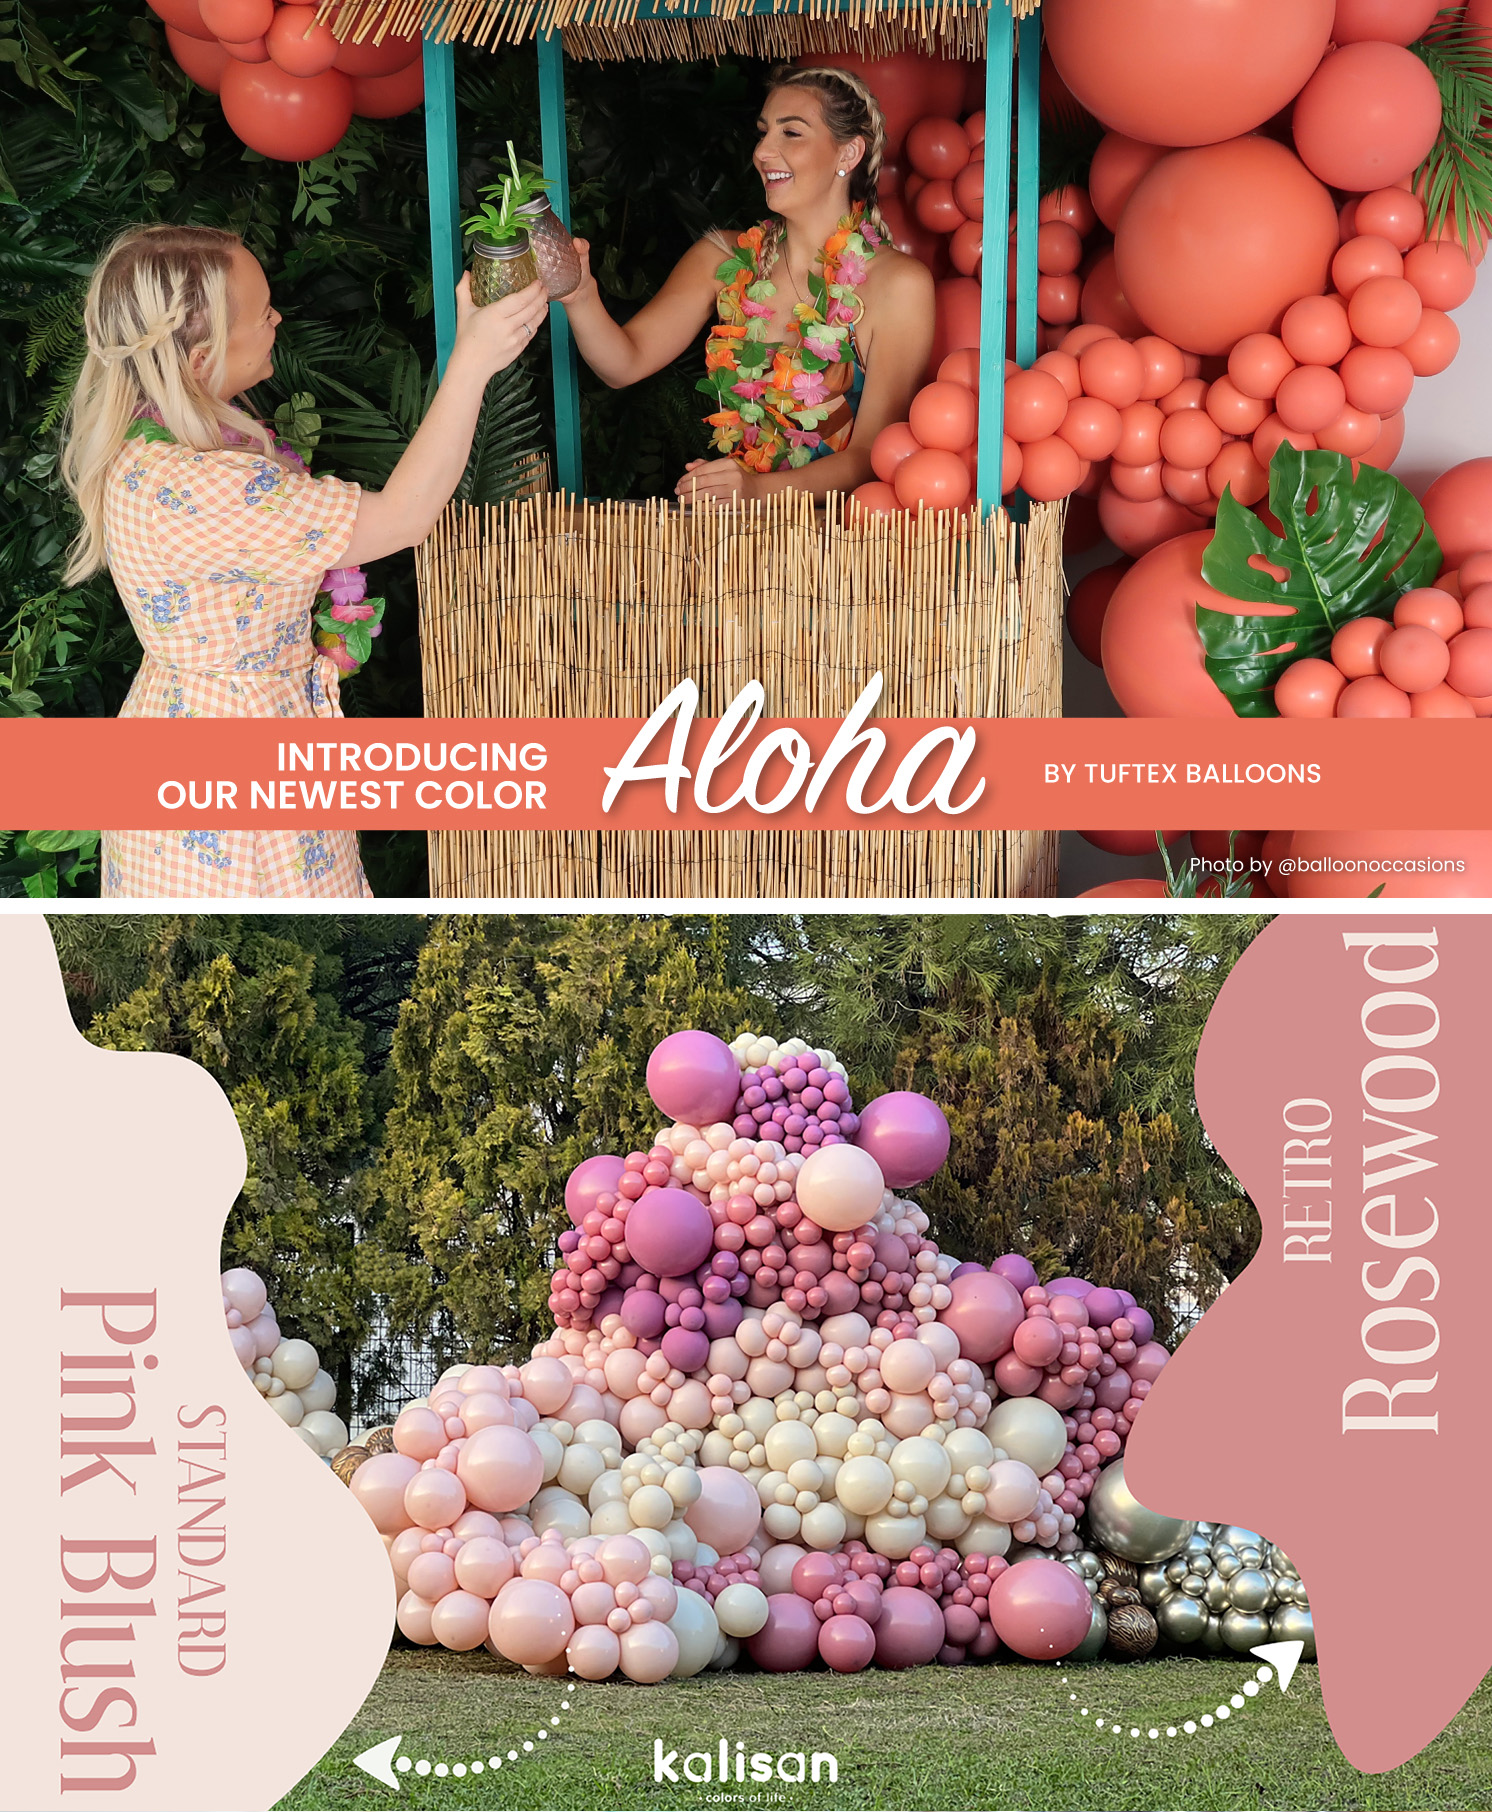 Aloha by Tuftex Balloons & new Kalisan products